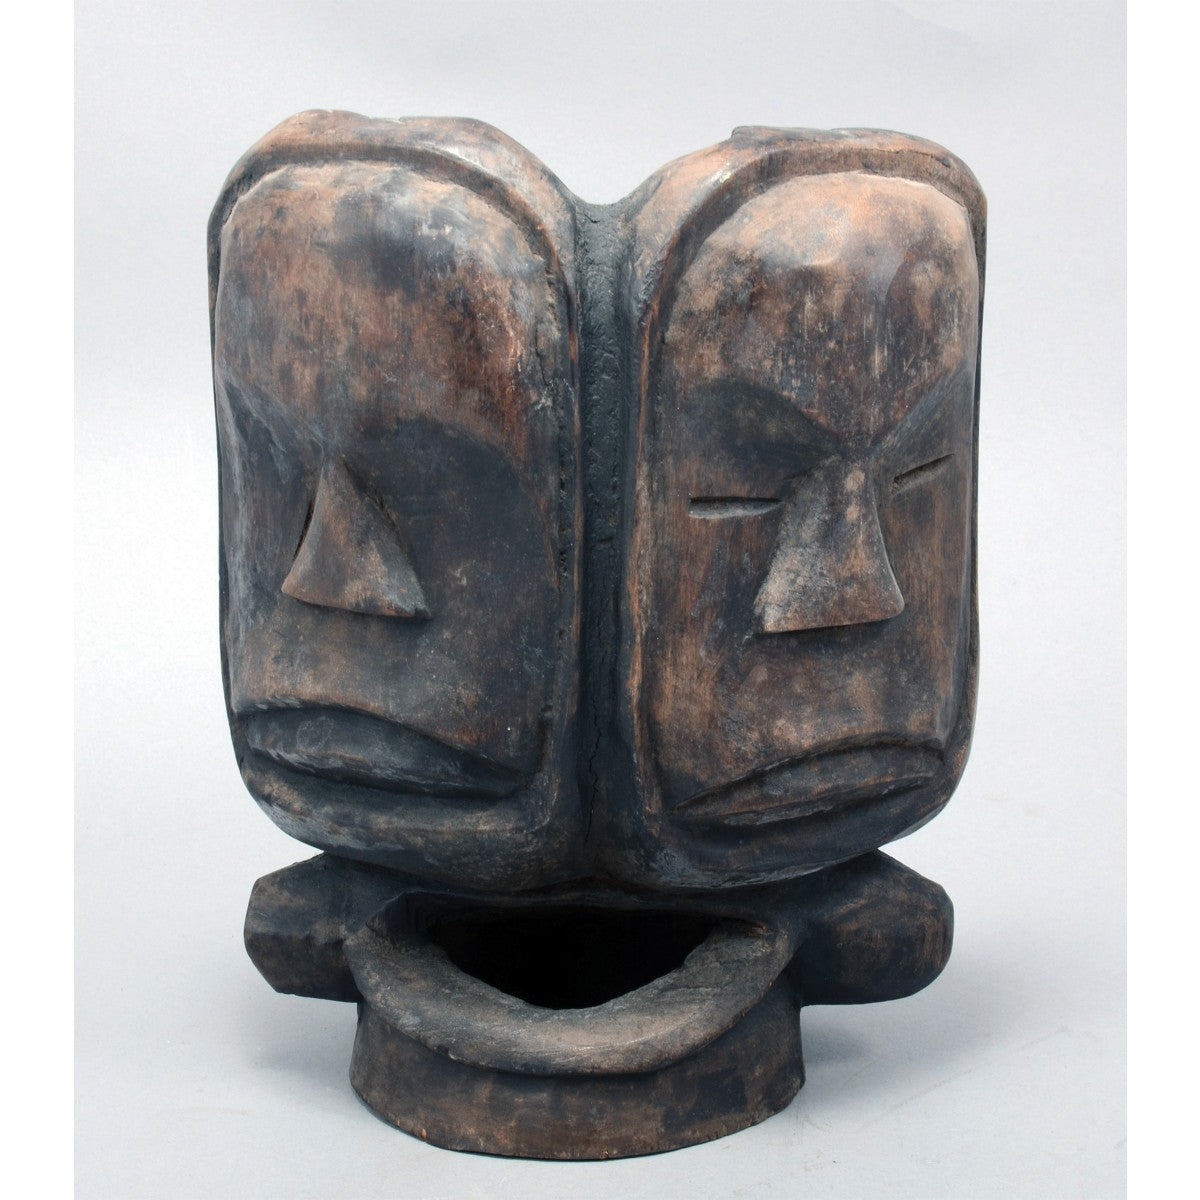 Antique Janus Face, an African Ceremonial Mask, Vintage African Art